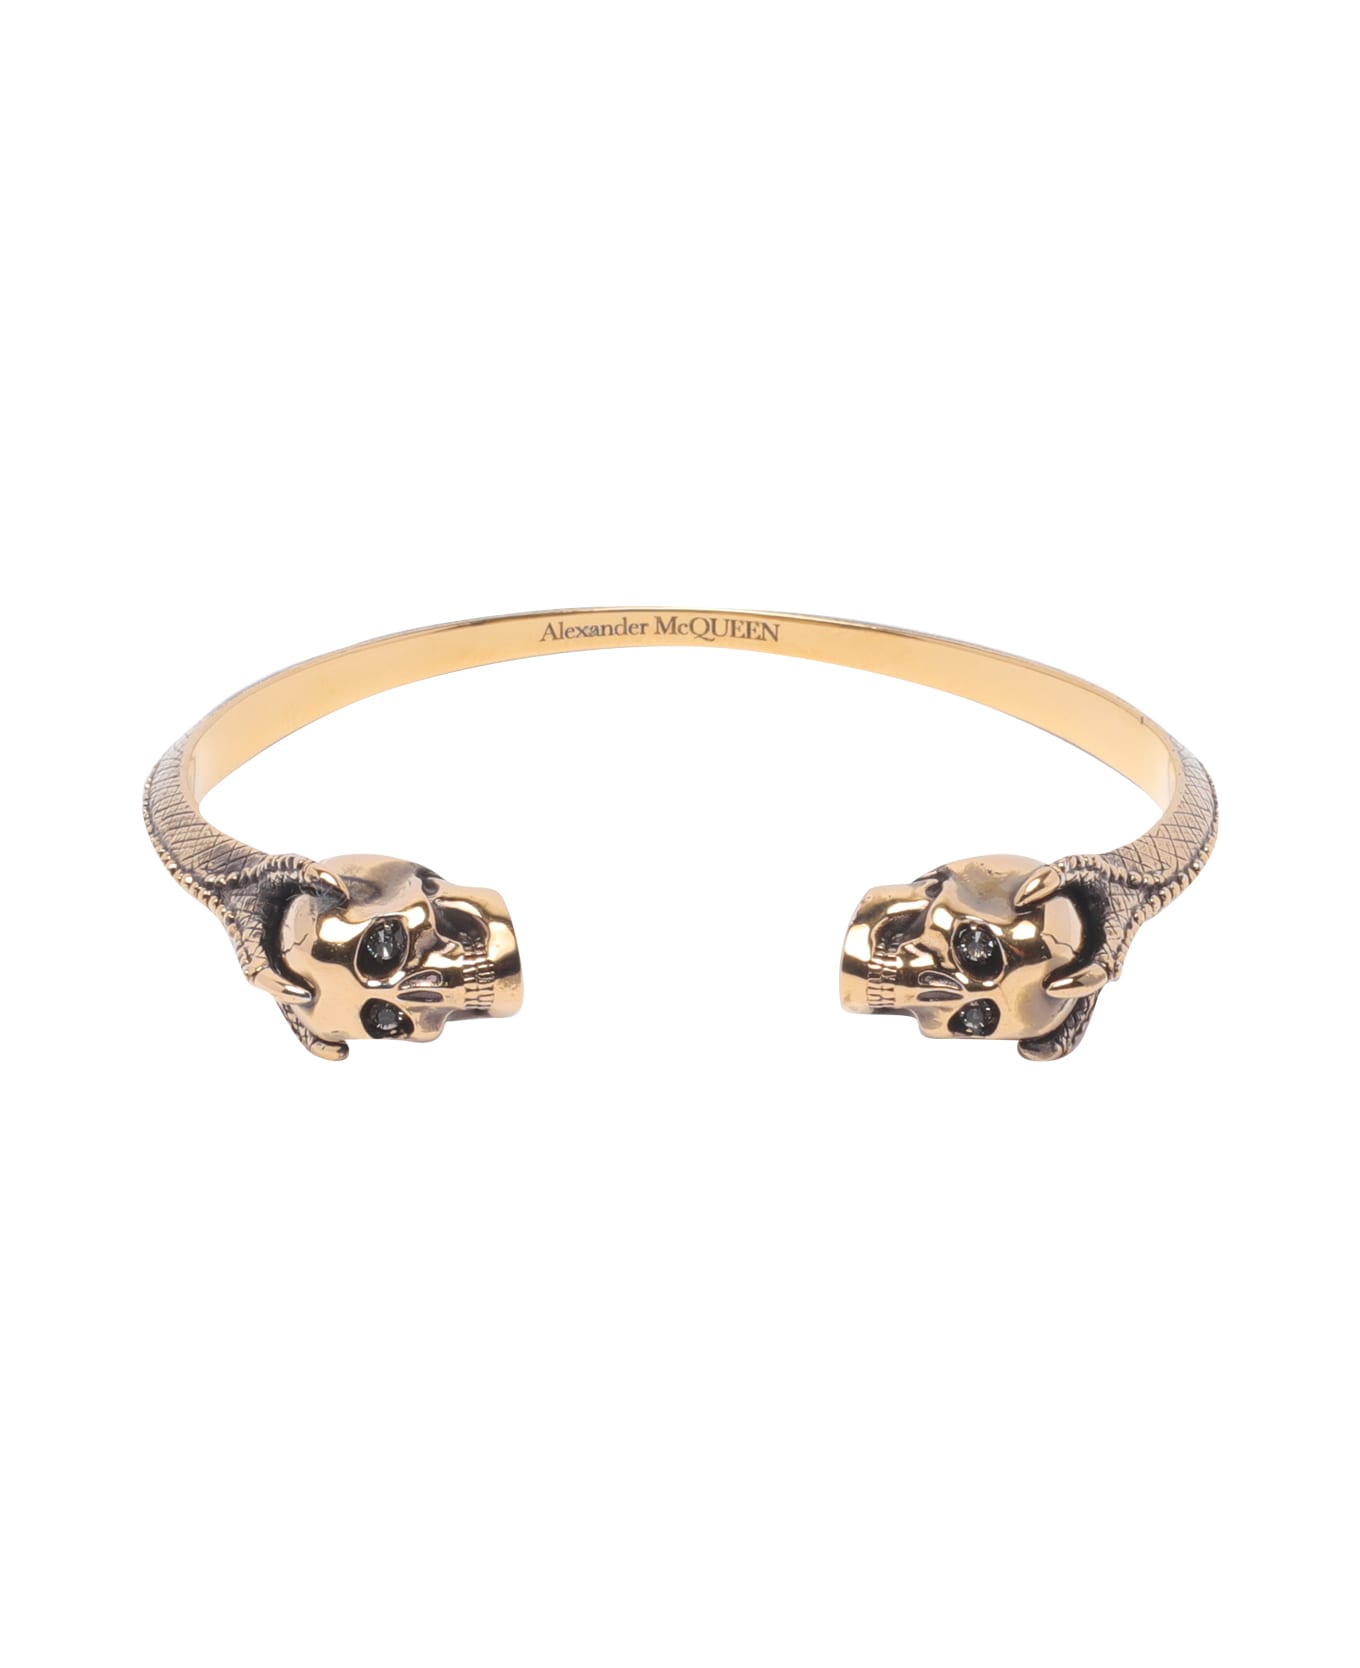 Alexander McQueen Skull Bracelet - Golden ブレスレット